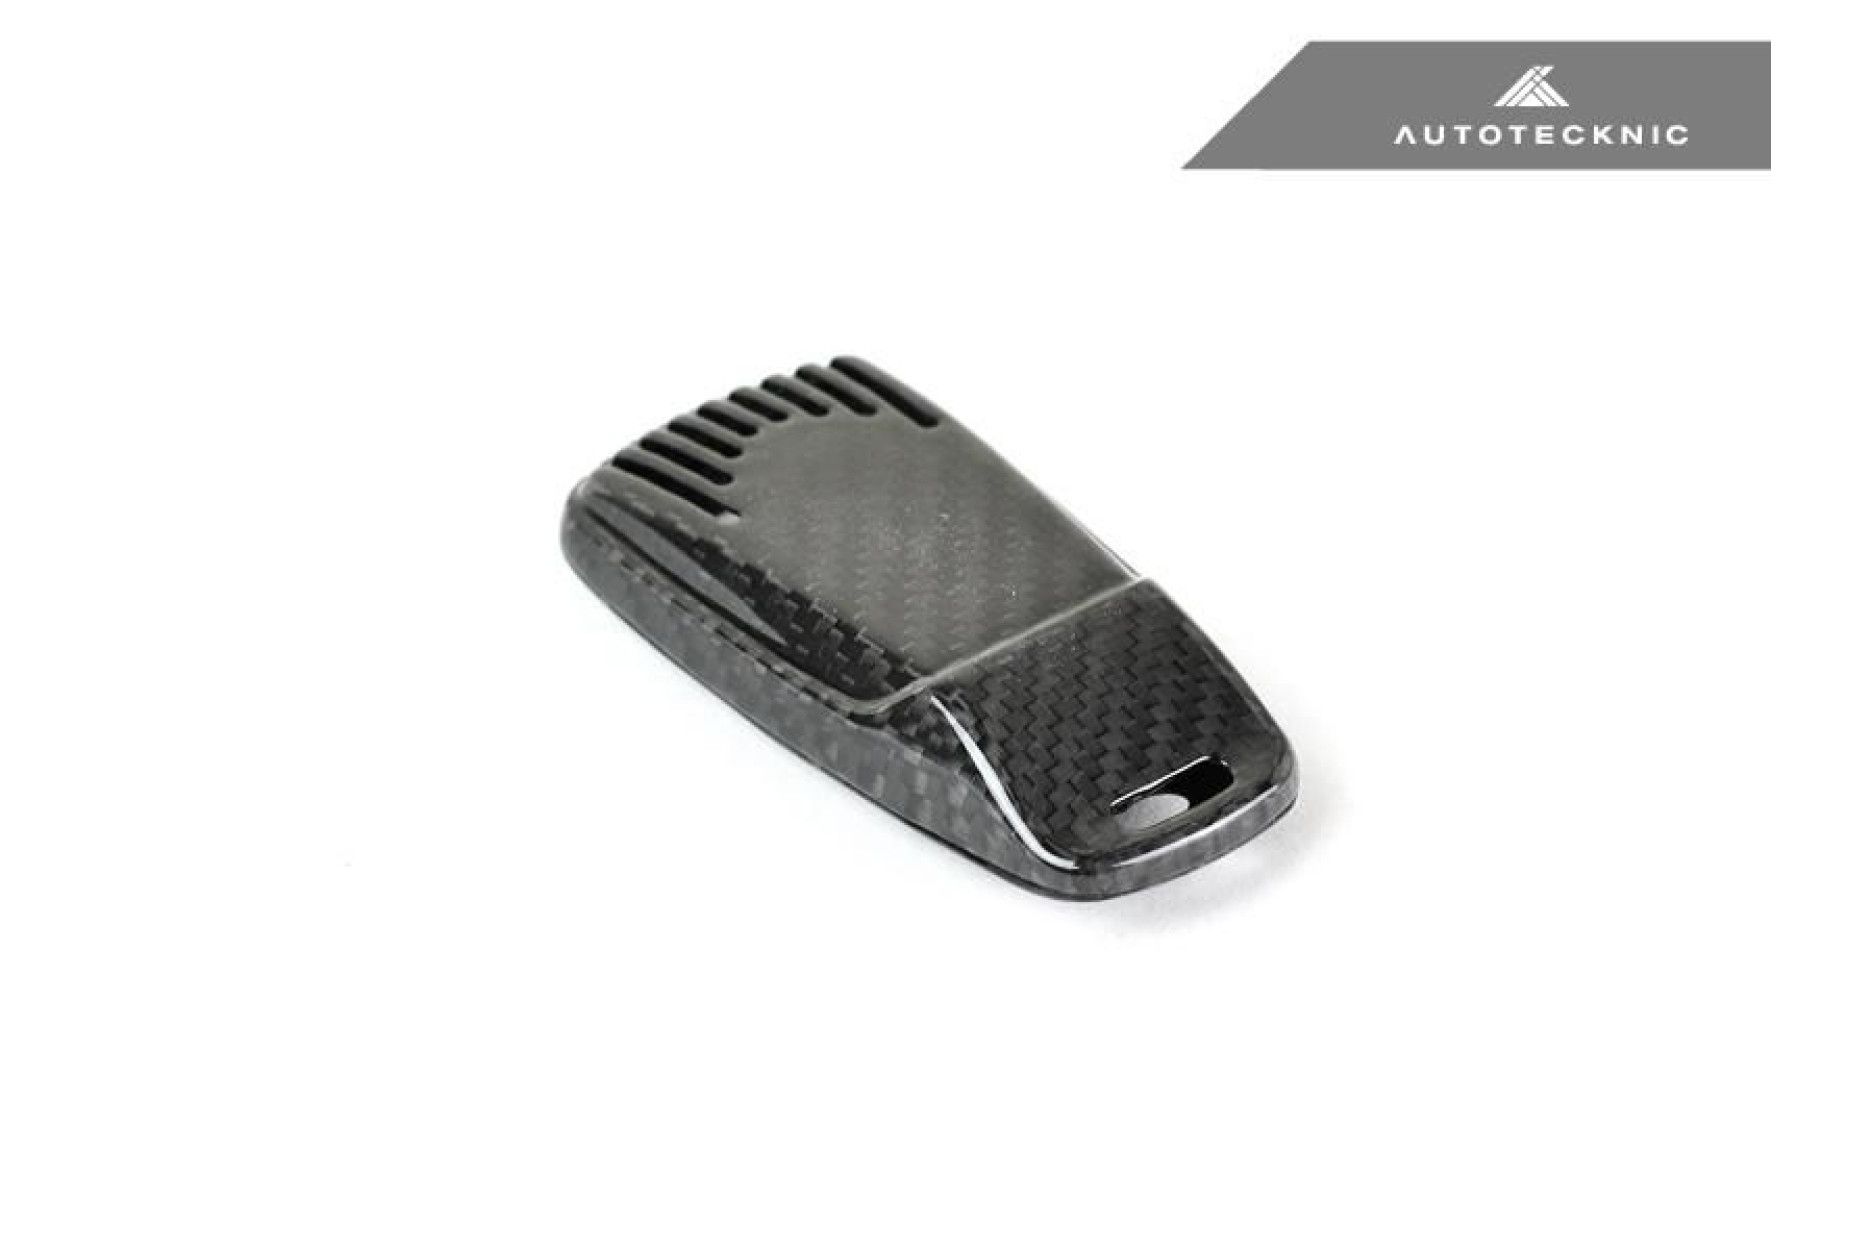 MAX Carbon kompatibel mit Audi Rot Carbon Style Look gfk Schlüssel Cover  Hülle Etui A4 A5